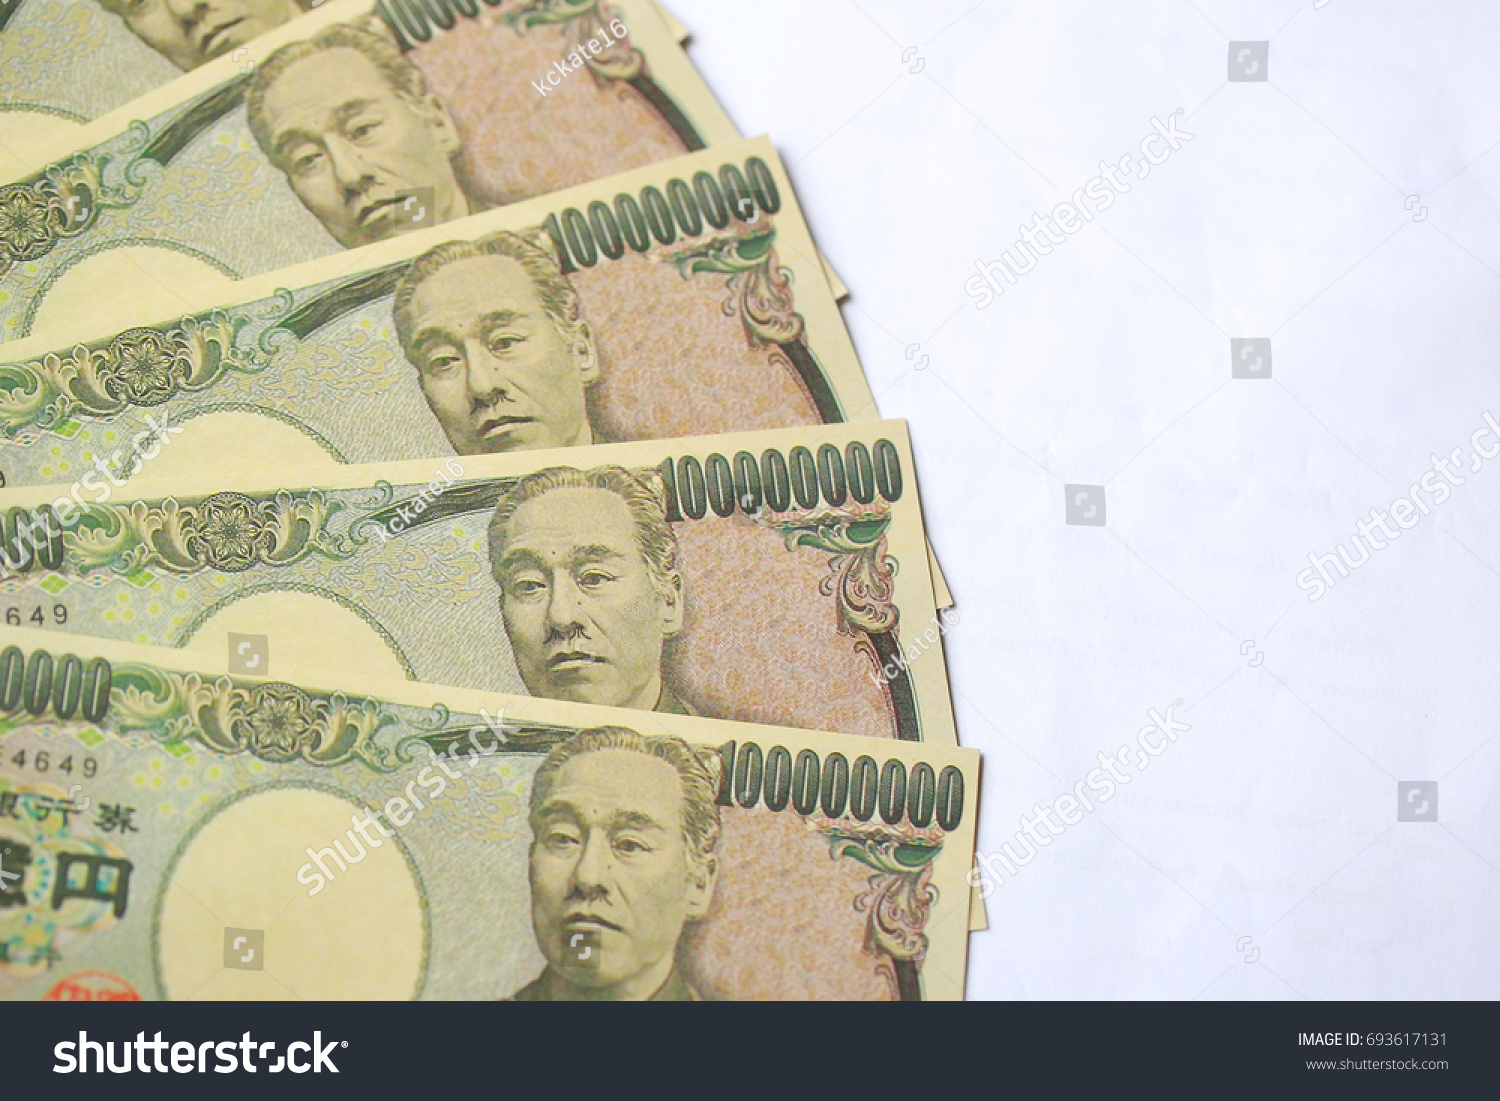 Million myr 300 yen to RM 4300